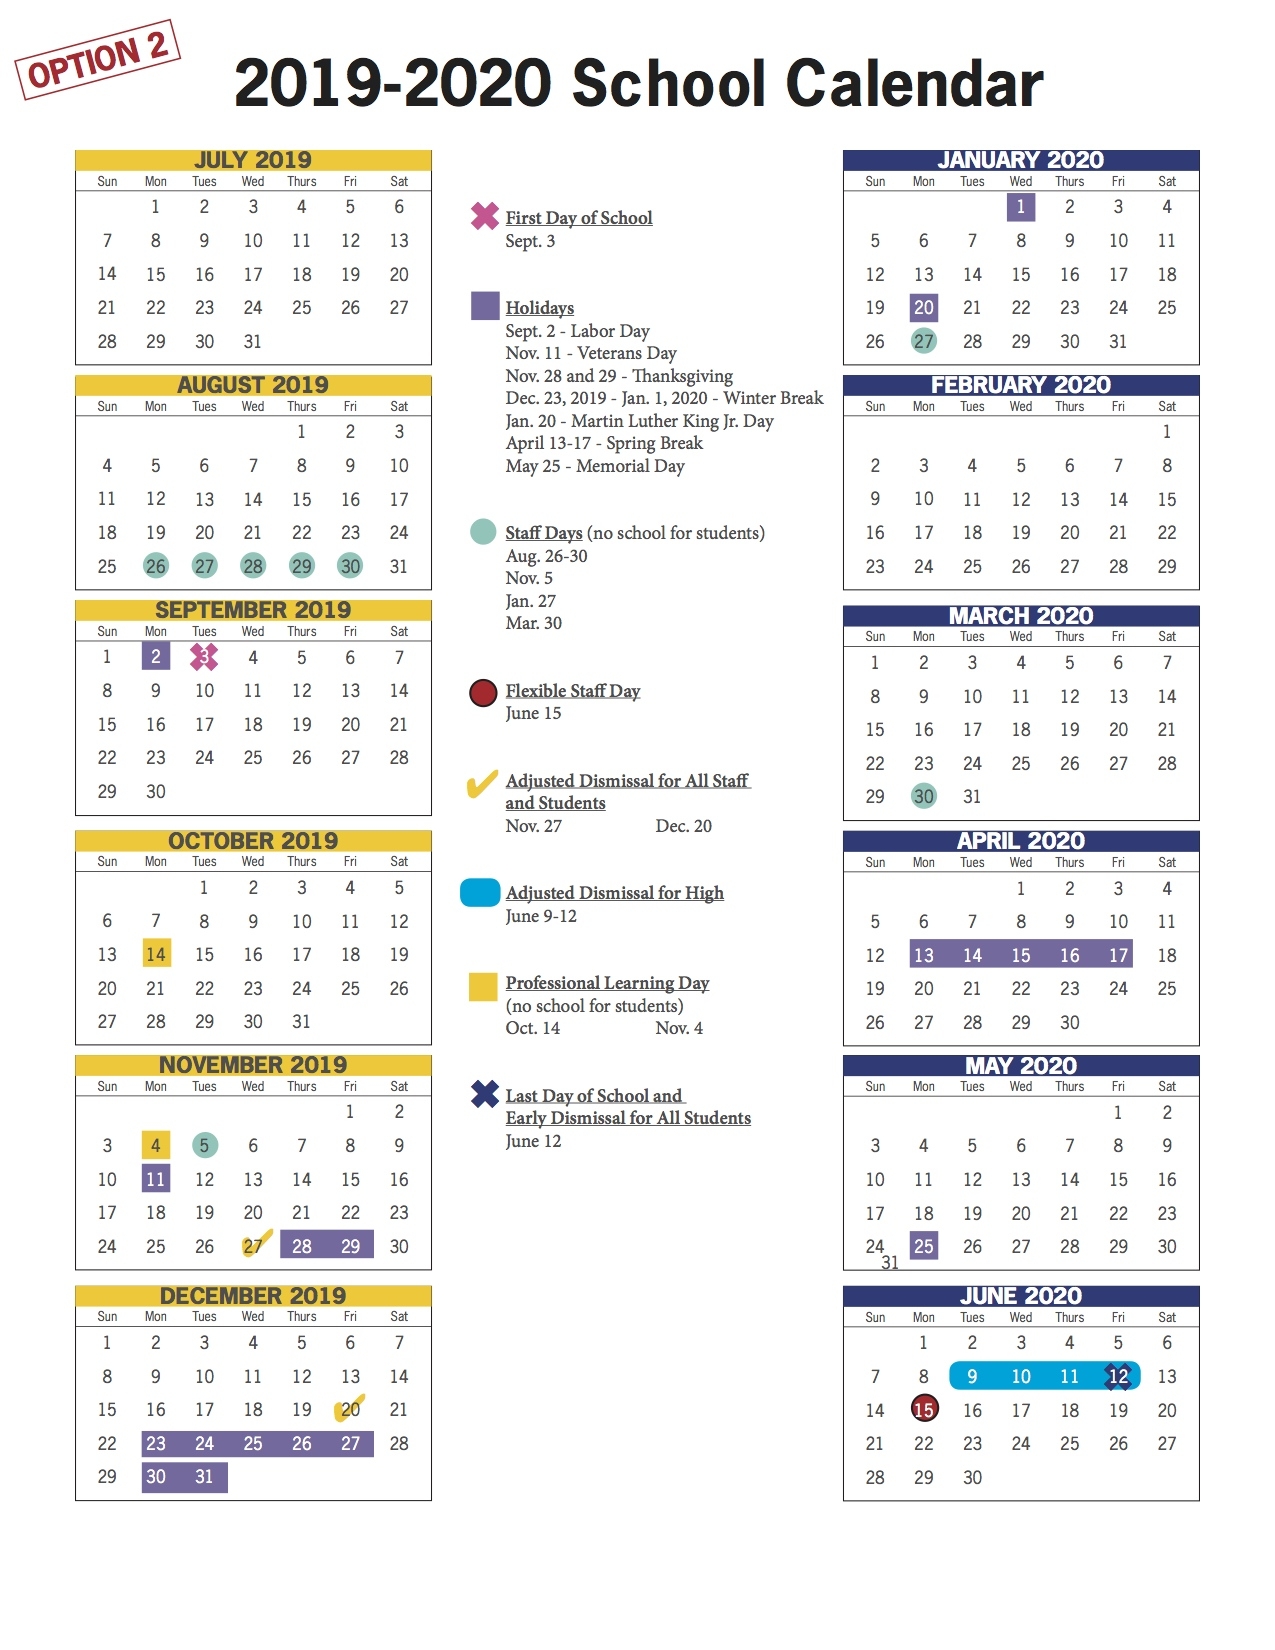 Vbcps E-Town Hall - 2018-2019 And 2019-2020 School Calendar Review School Calendar For Virginia Beach